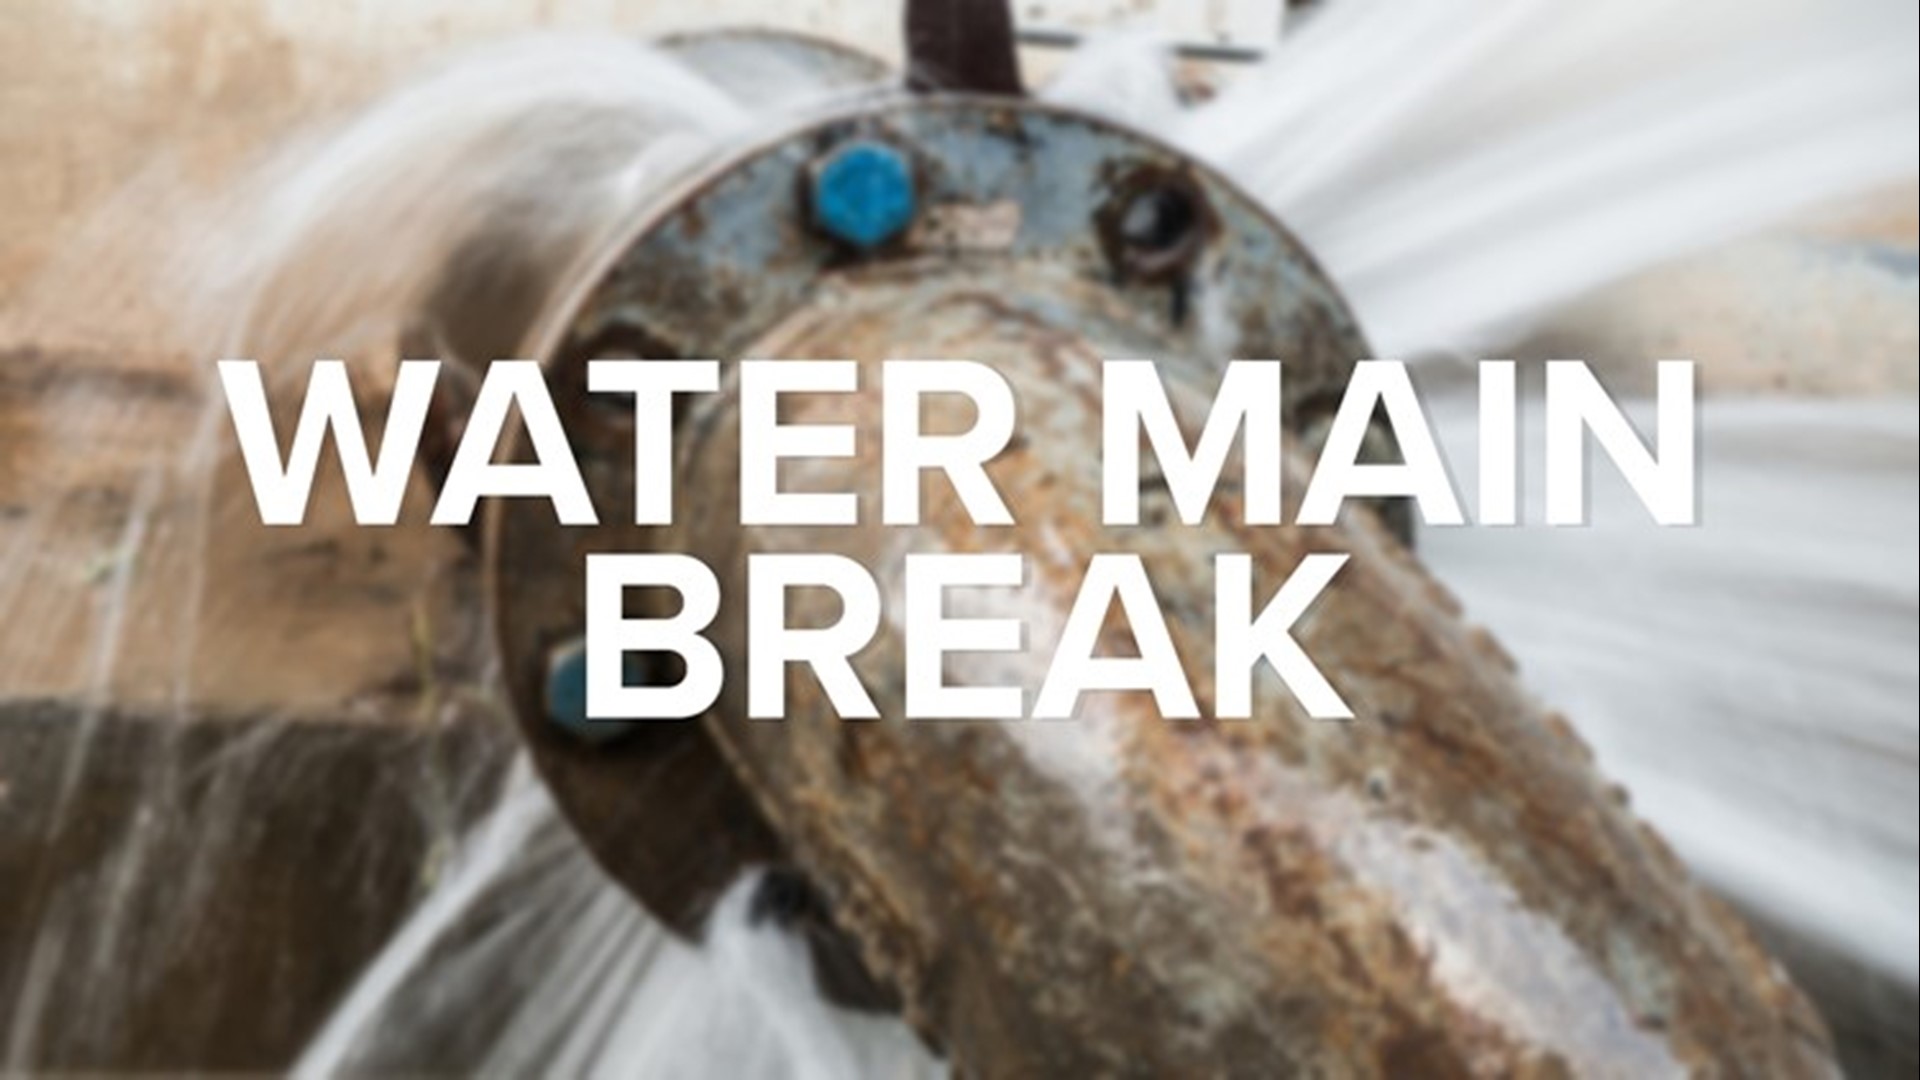 The water main break is affecting parts of Nanticoke, Glen Lyon, and Newport Township.